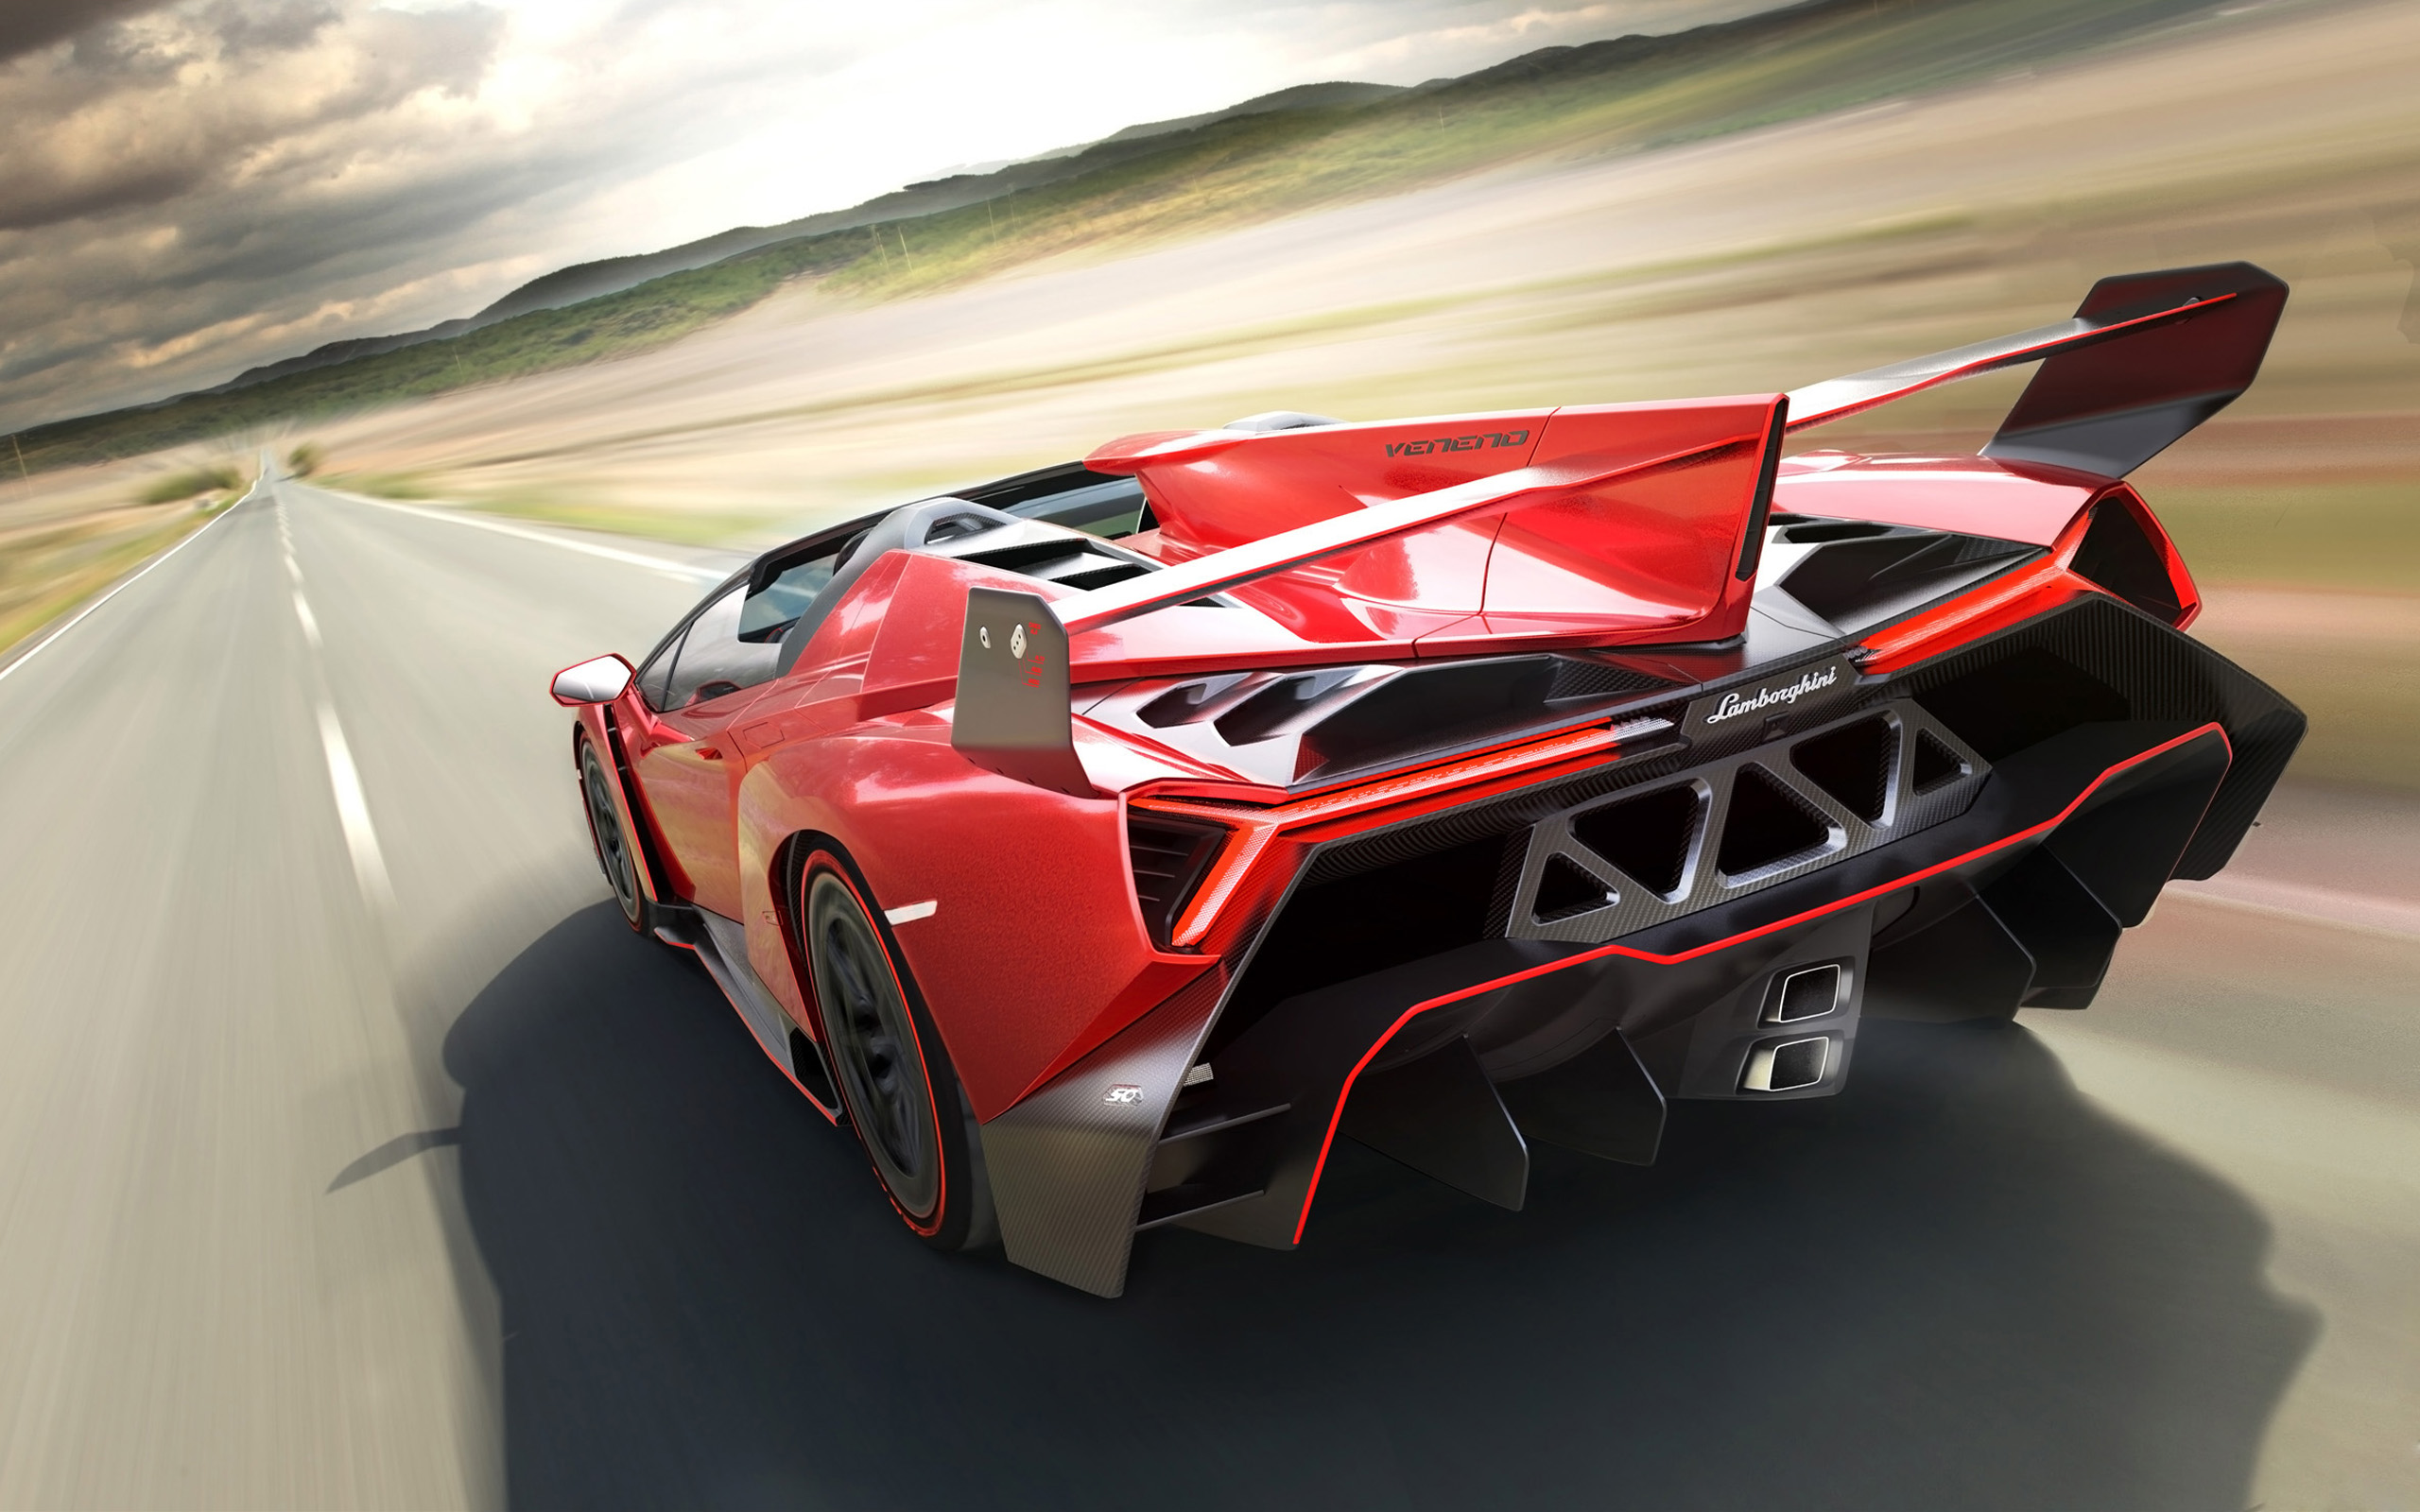  2014 Lamborghini Veneno Roadster Wallpaper.